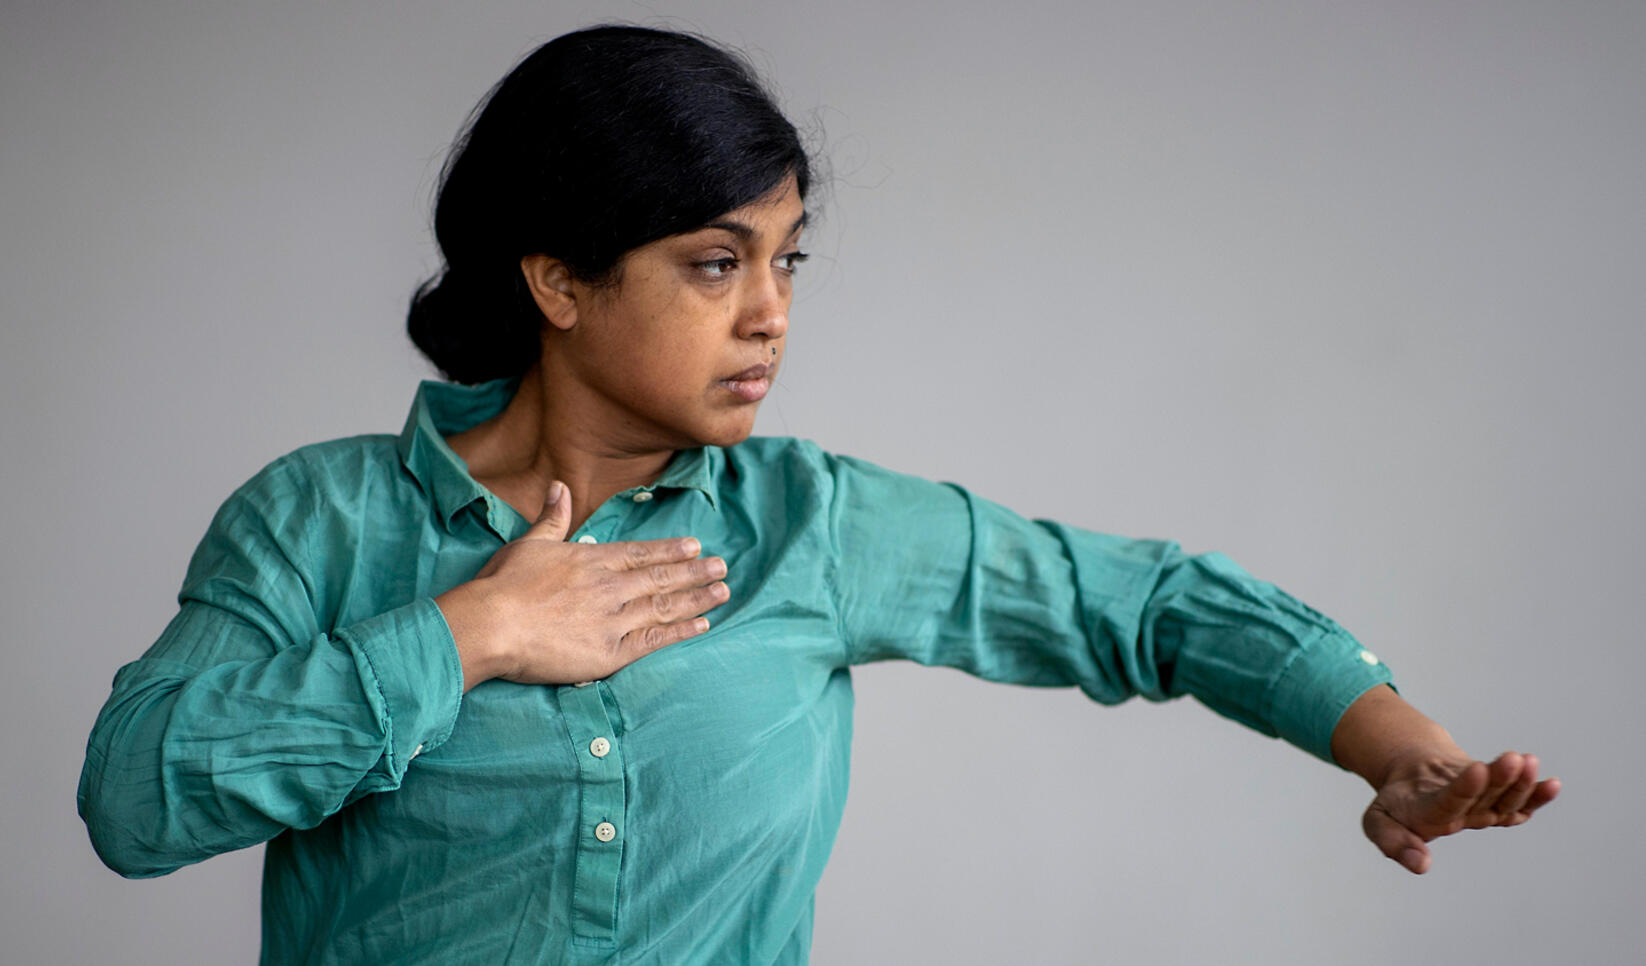 Pramila Vasudevan dancing in a cyan shirt against a grey background